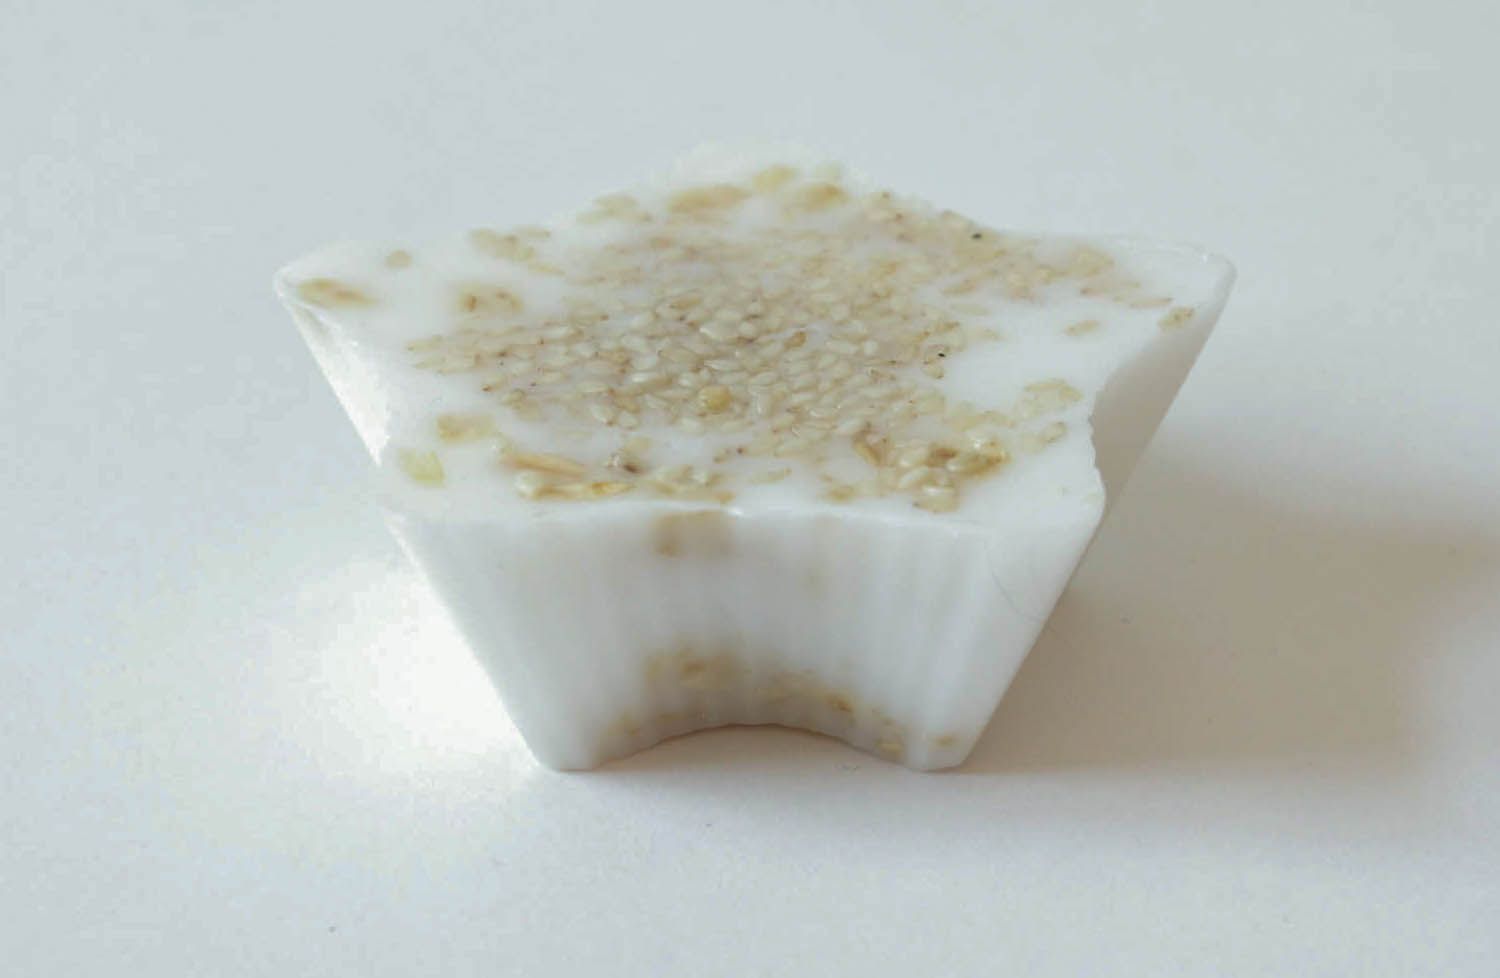 Handmade soap scrub with oats and sesame photo 2